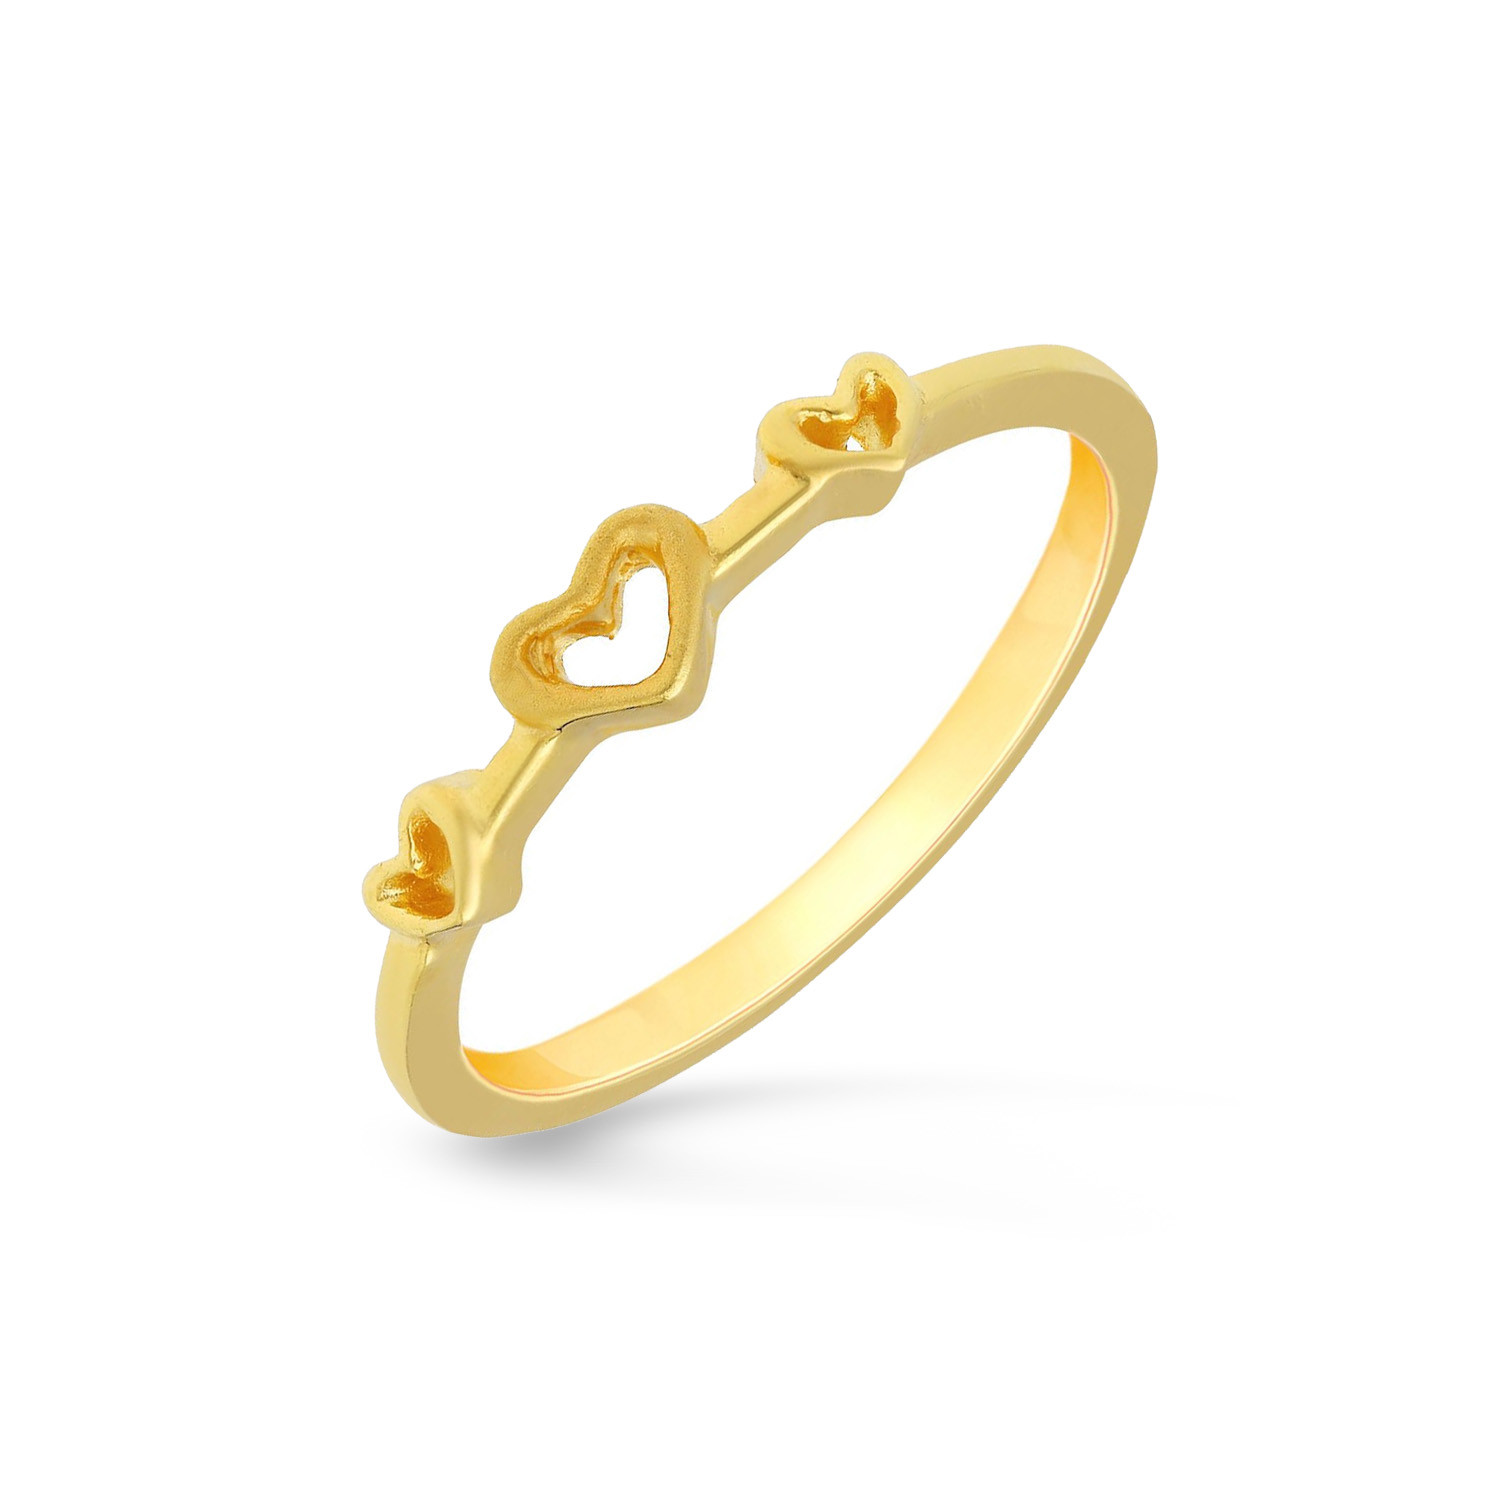 Malabar 22 KT Gold Studded Casual Ring FRGEDZRURGW711